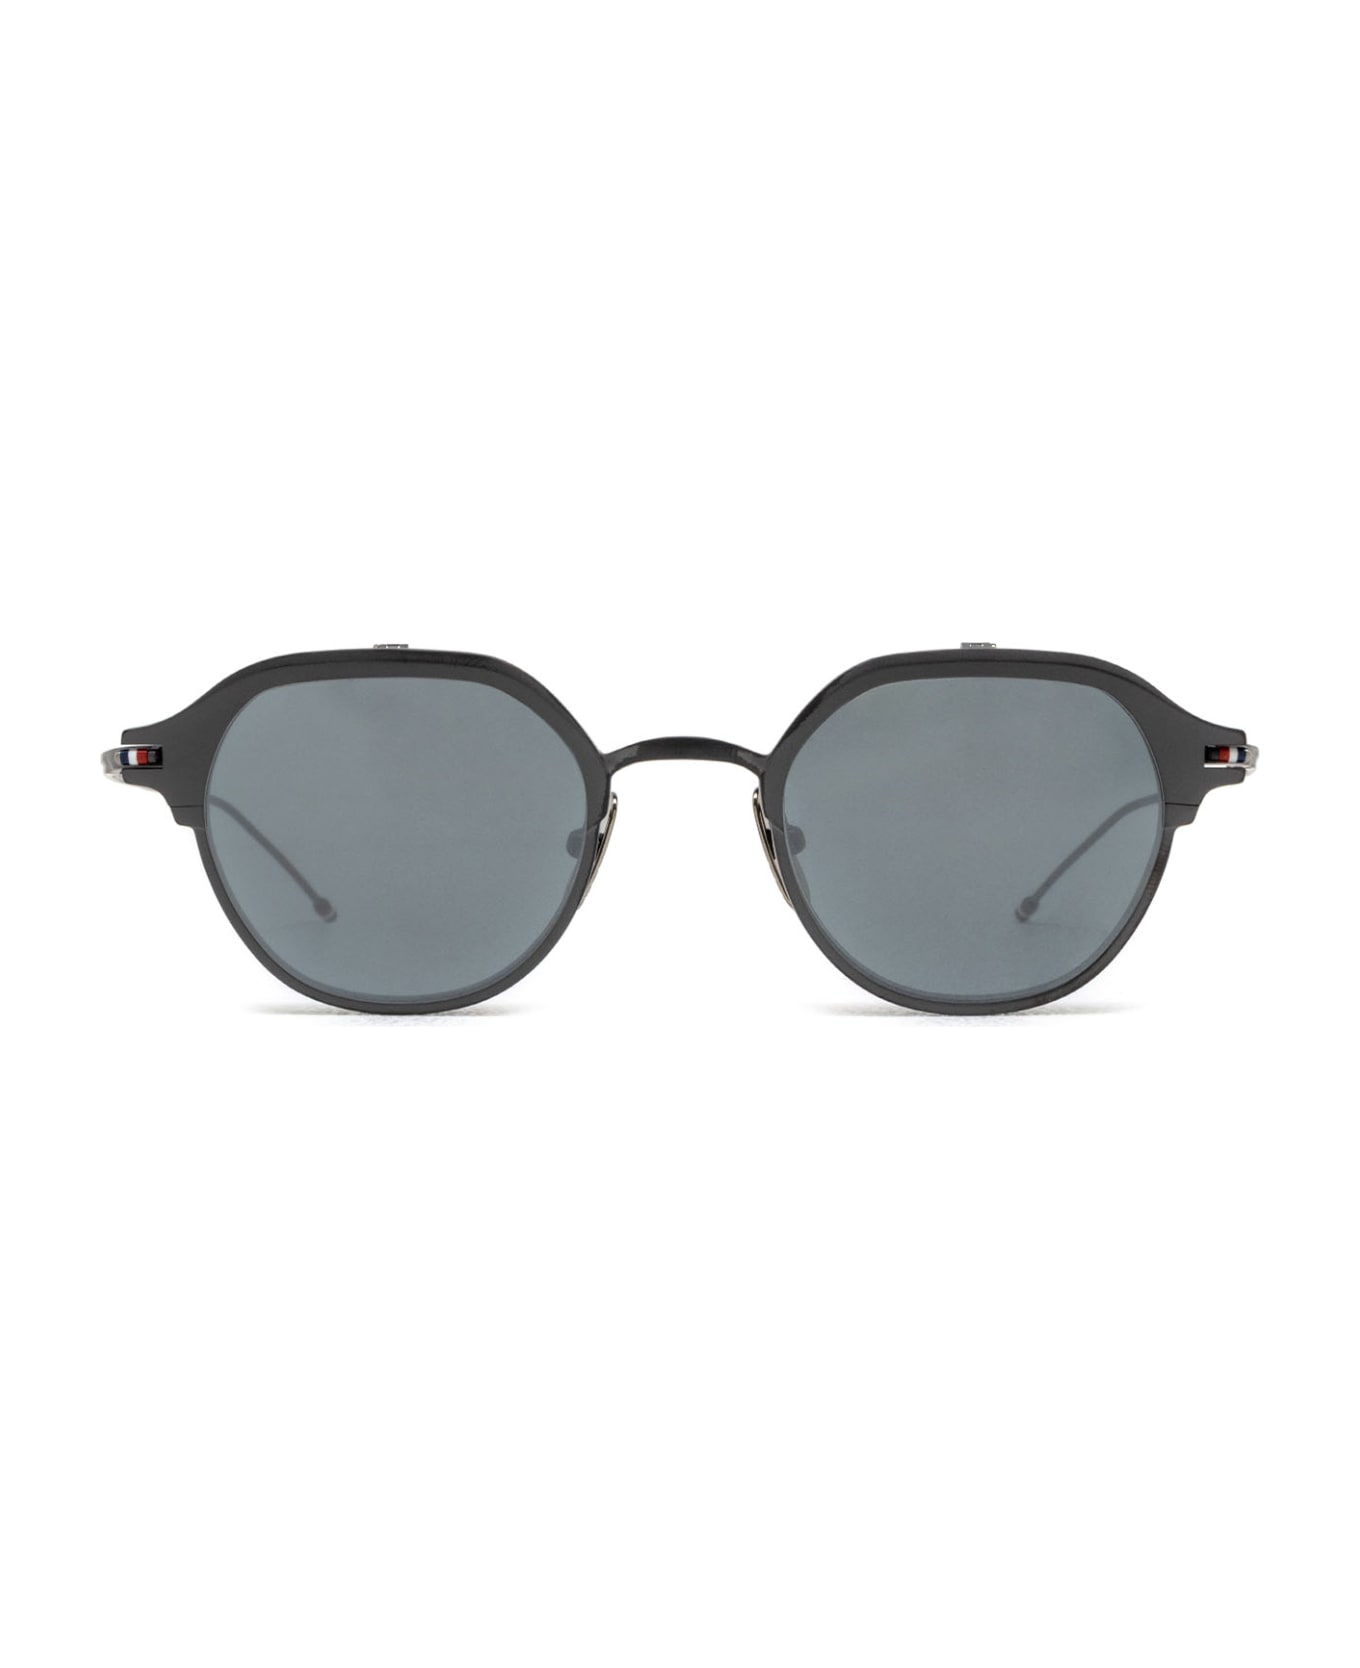 Thom Browne Ues812a Black / Charcoal Sunglasses - Black / Charcoal